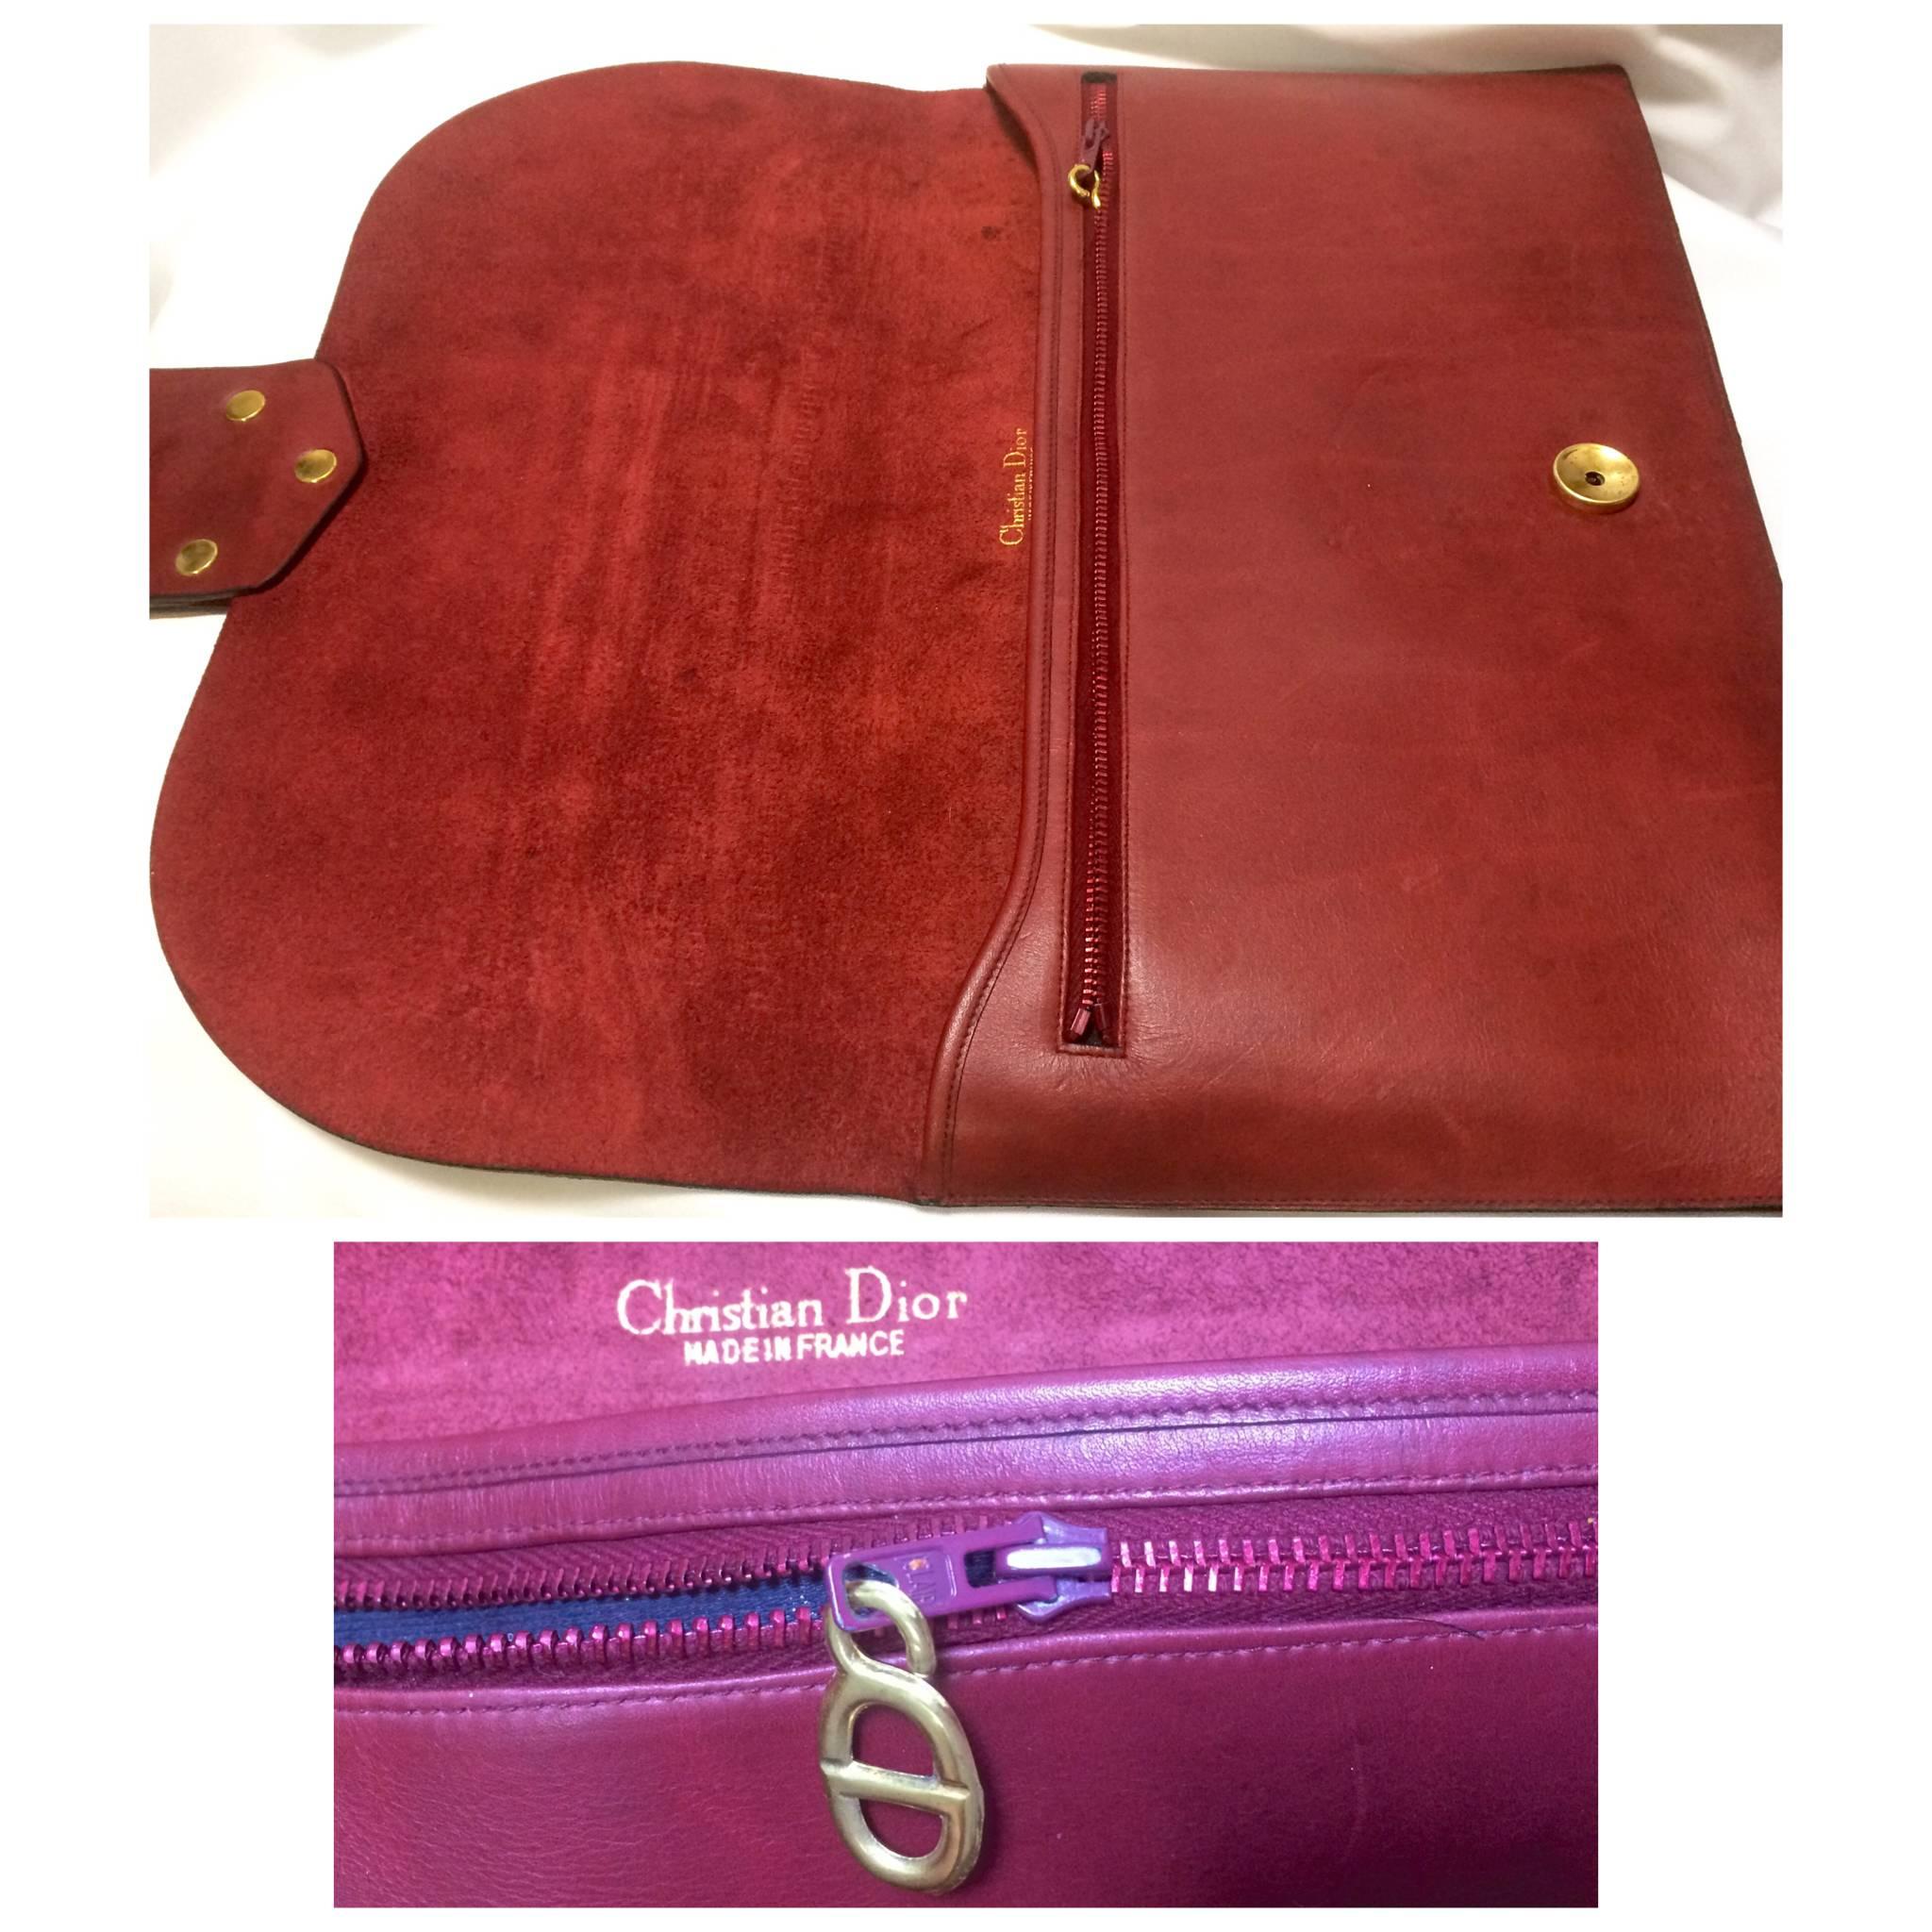 Vintage Christian Dior wine leather document, portfolio case bag. Unisex purse. 3